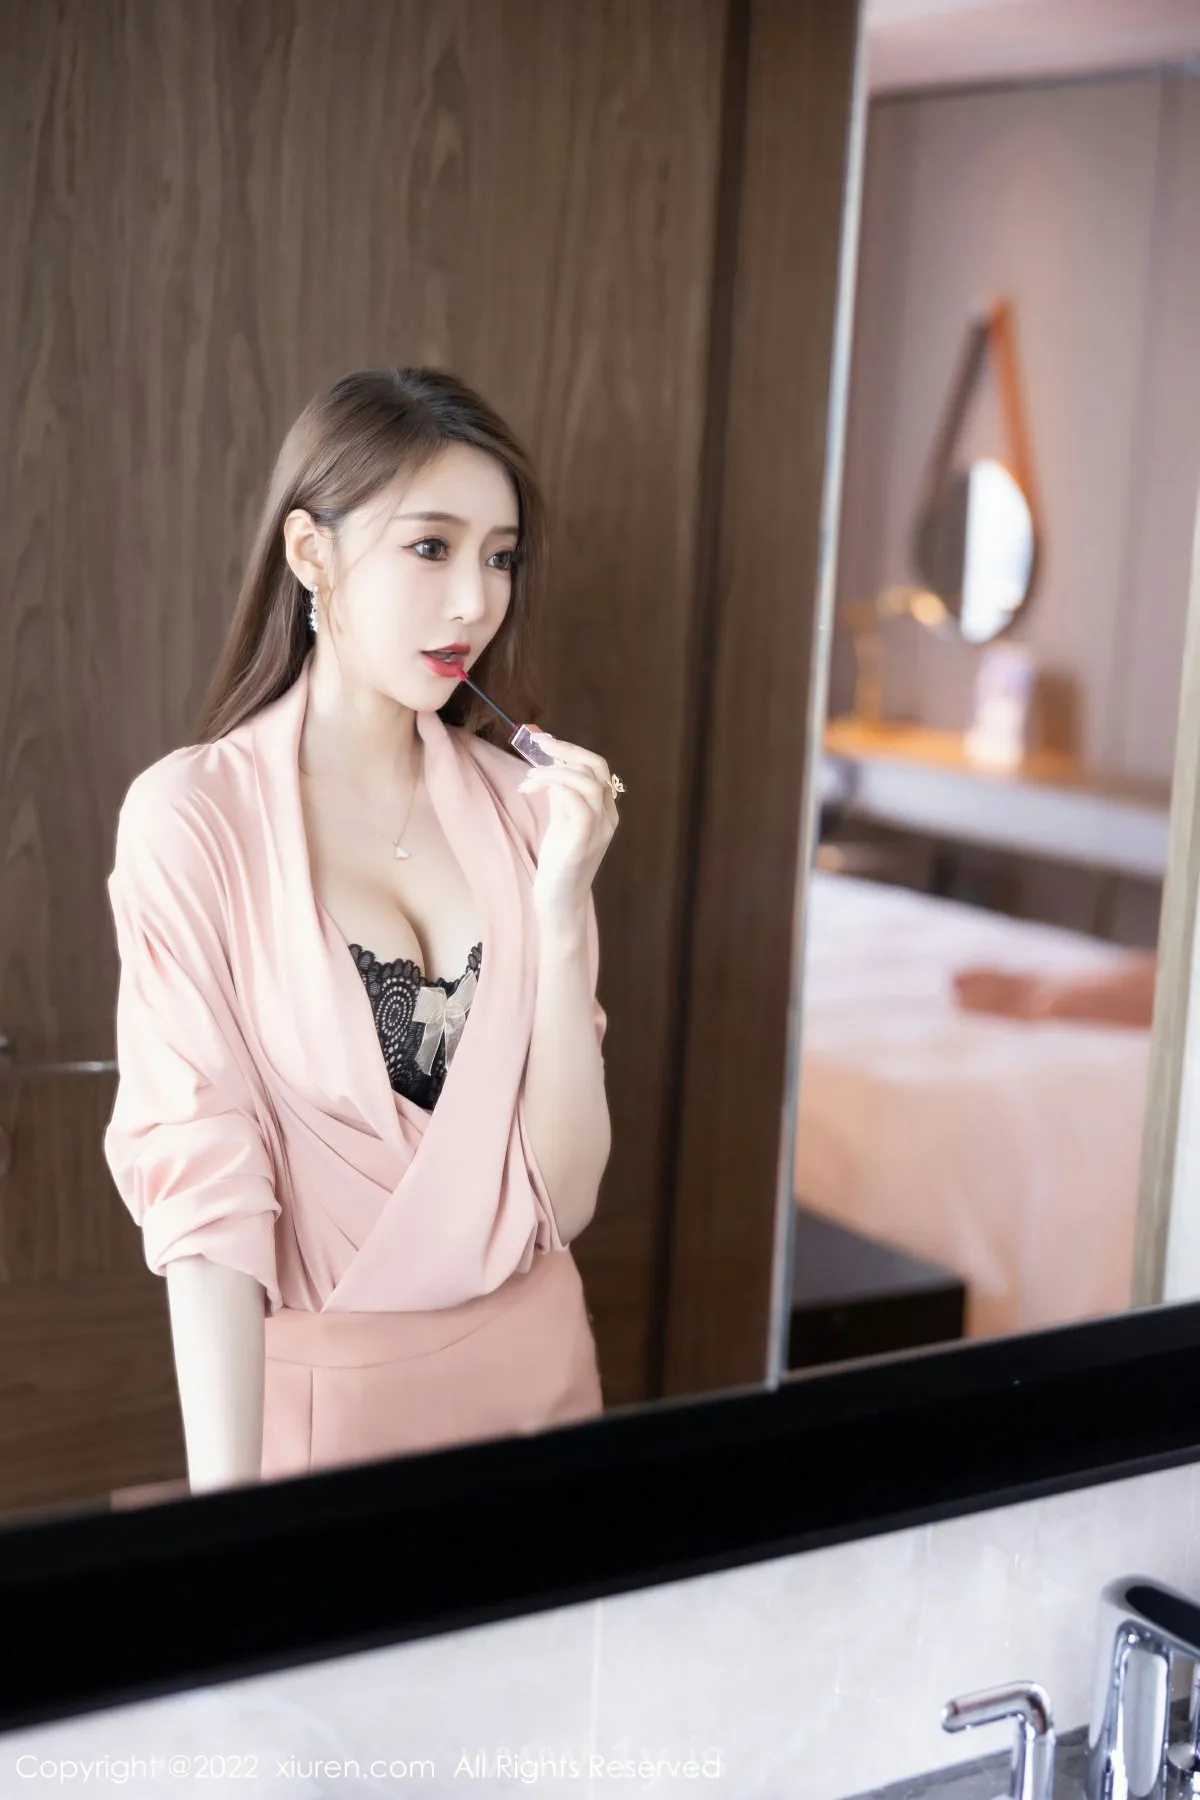 XIUREN(秀人网) NO.5257 Knockout & Lovely Asian Model 王馨瑶yanni